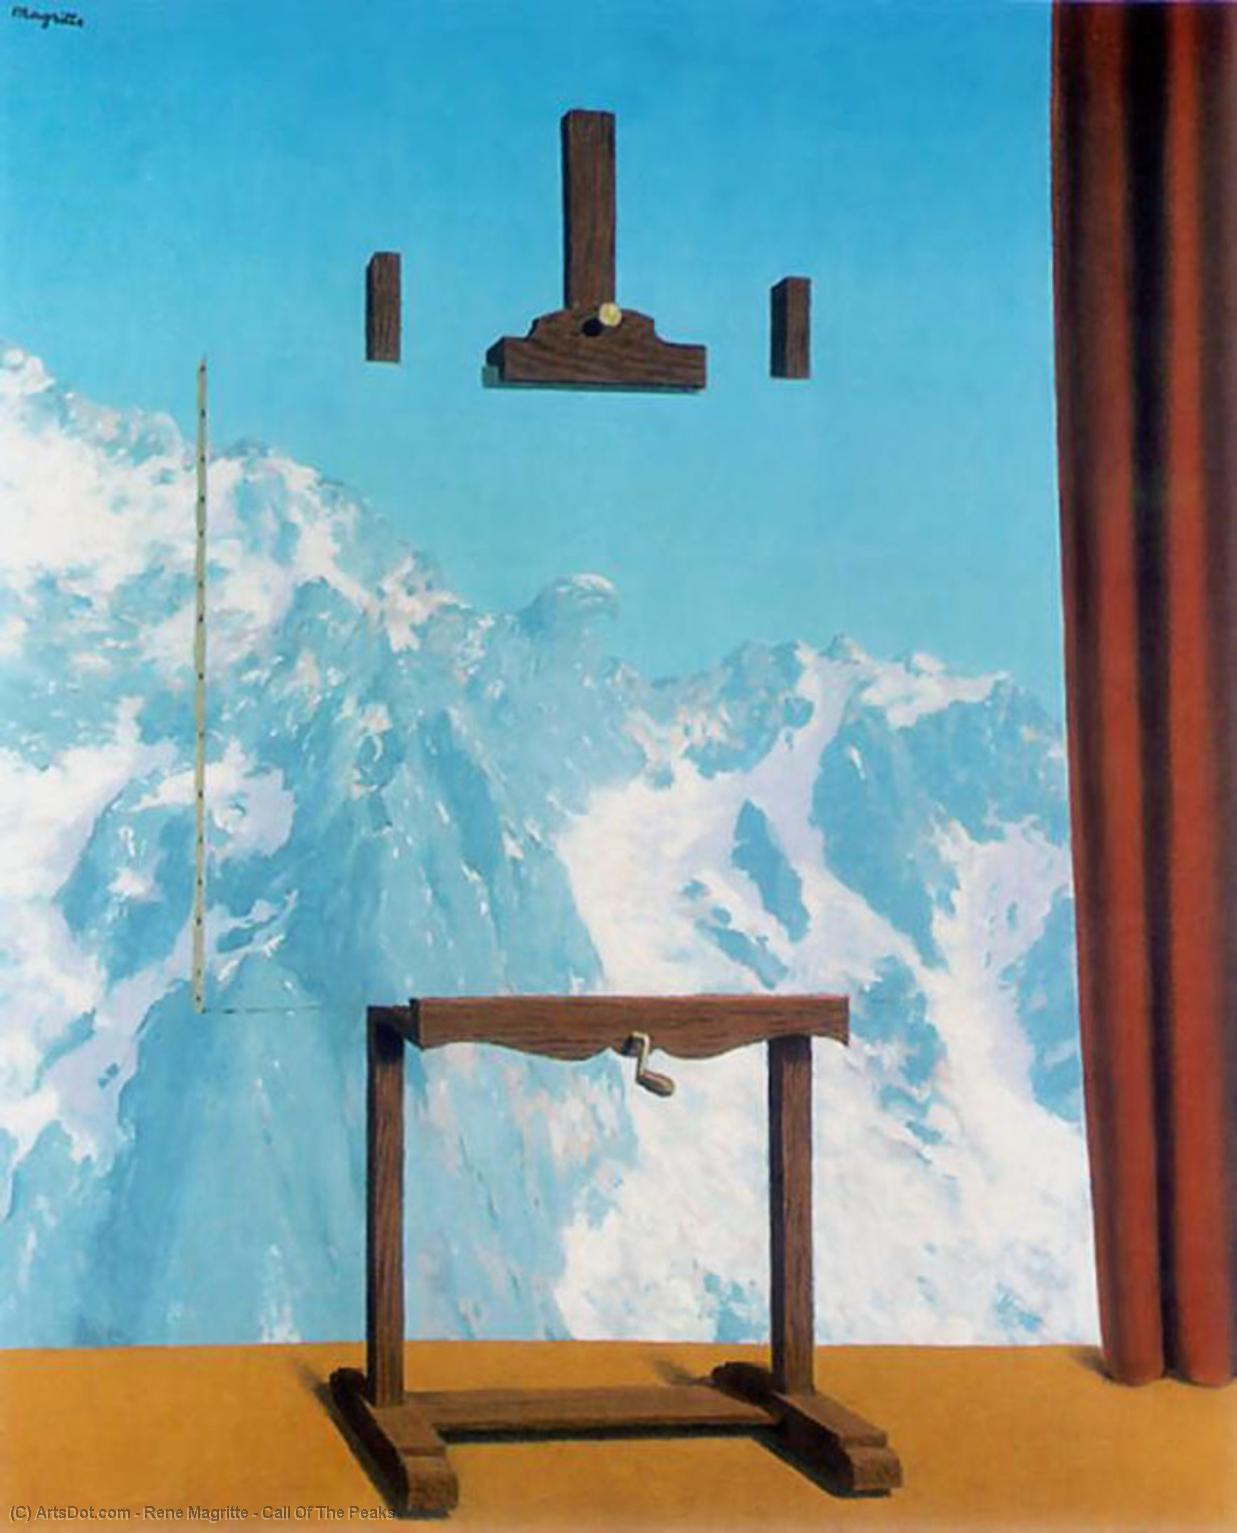 Wikoo.org - موسوعة الفنون الجميلة - اللوحة، العمل الفني Rene Magritte - Call Of The Peaks